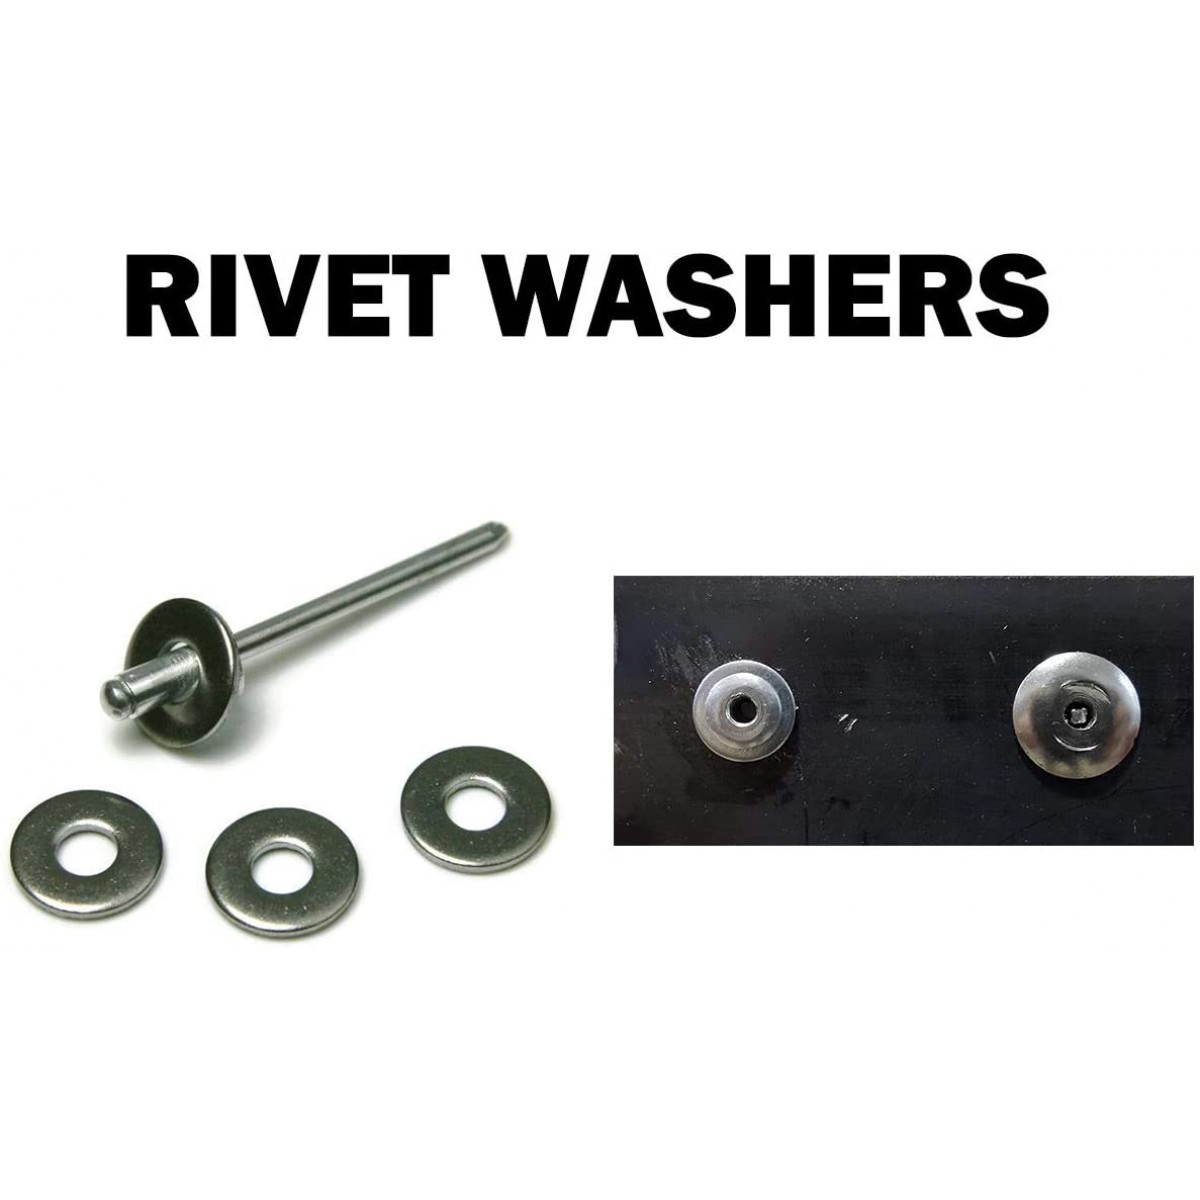 Persberg Blind Rivets washers